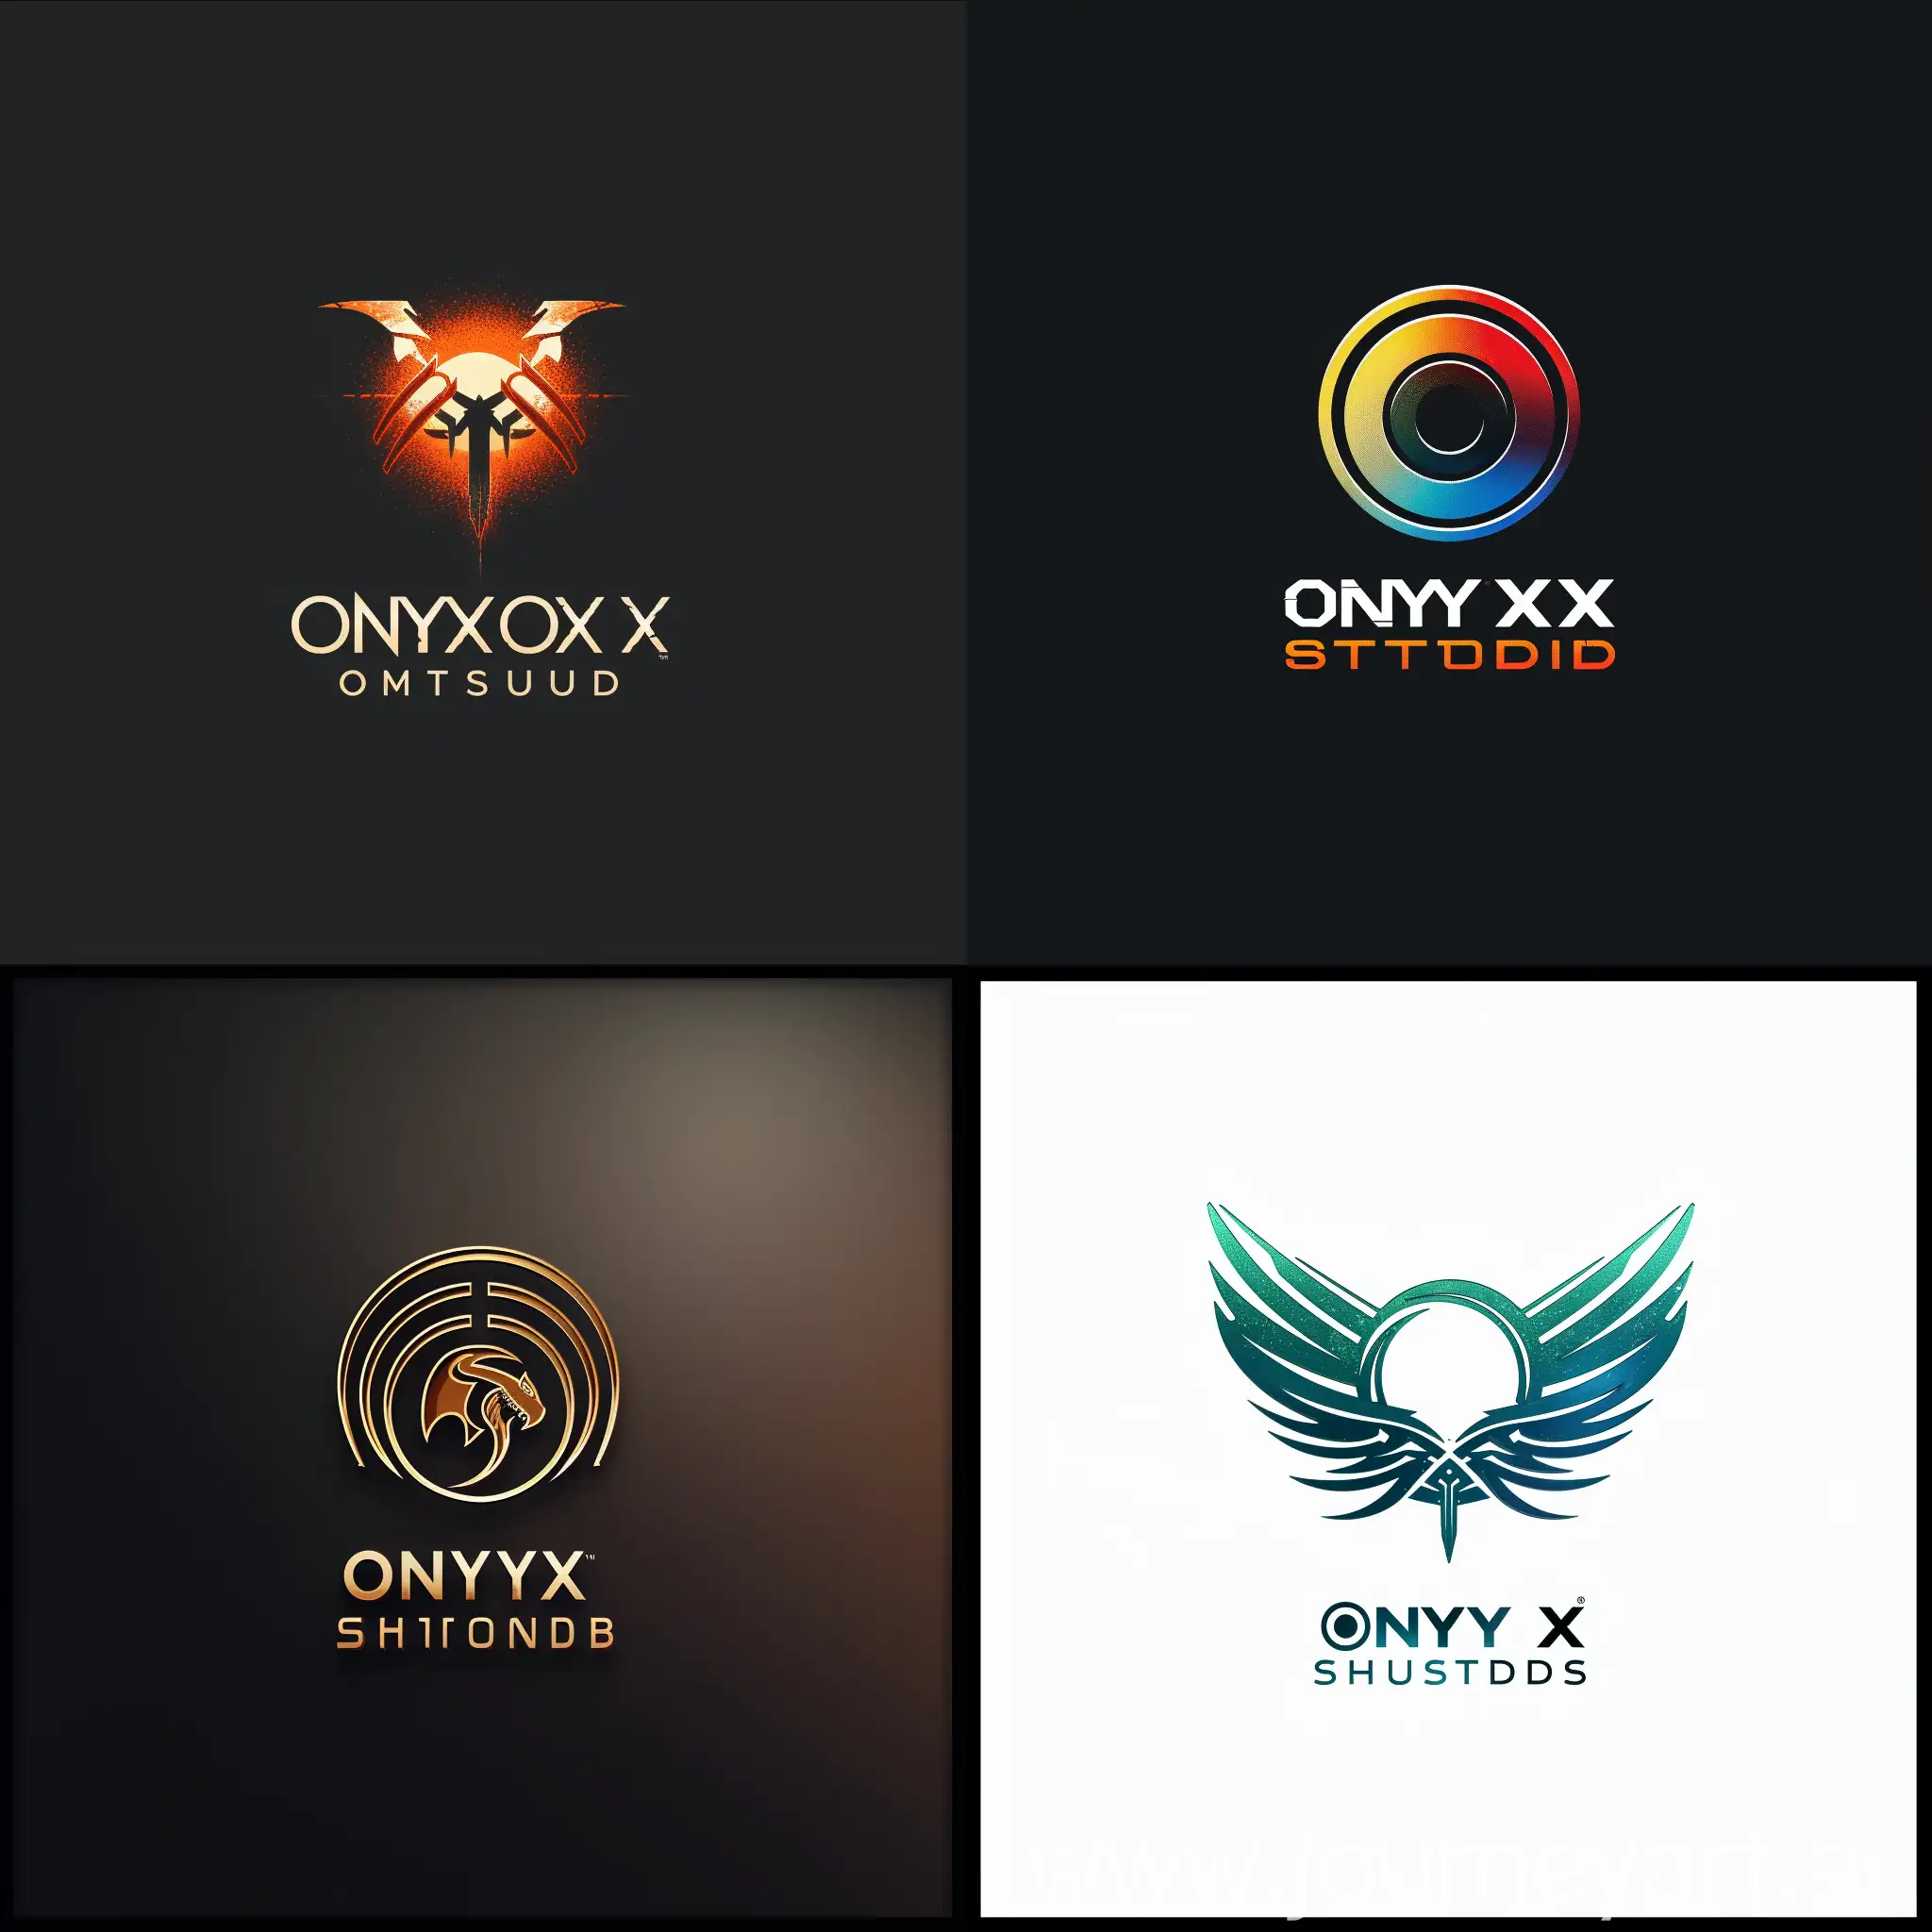 Onyx-Horizon-Studios-Game-Dev-Logo-with-Dynamic-Design